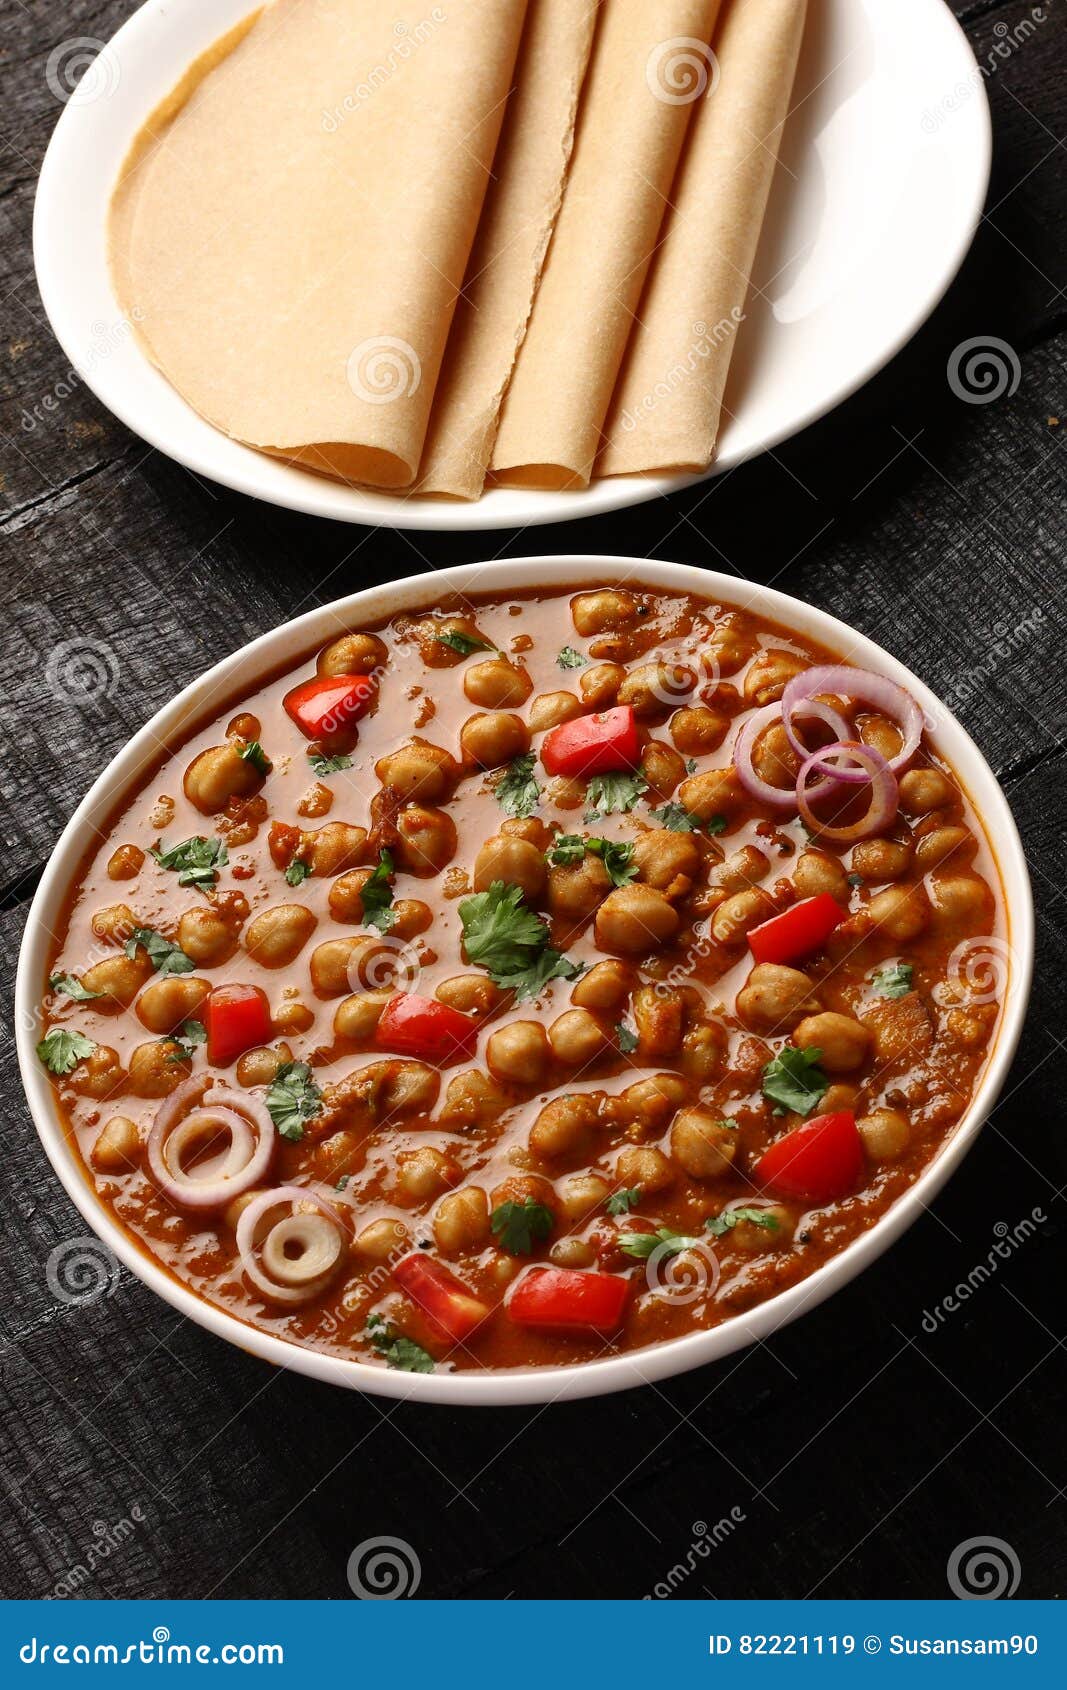 chola masala served in bowl